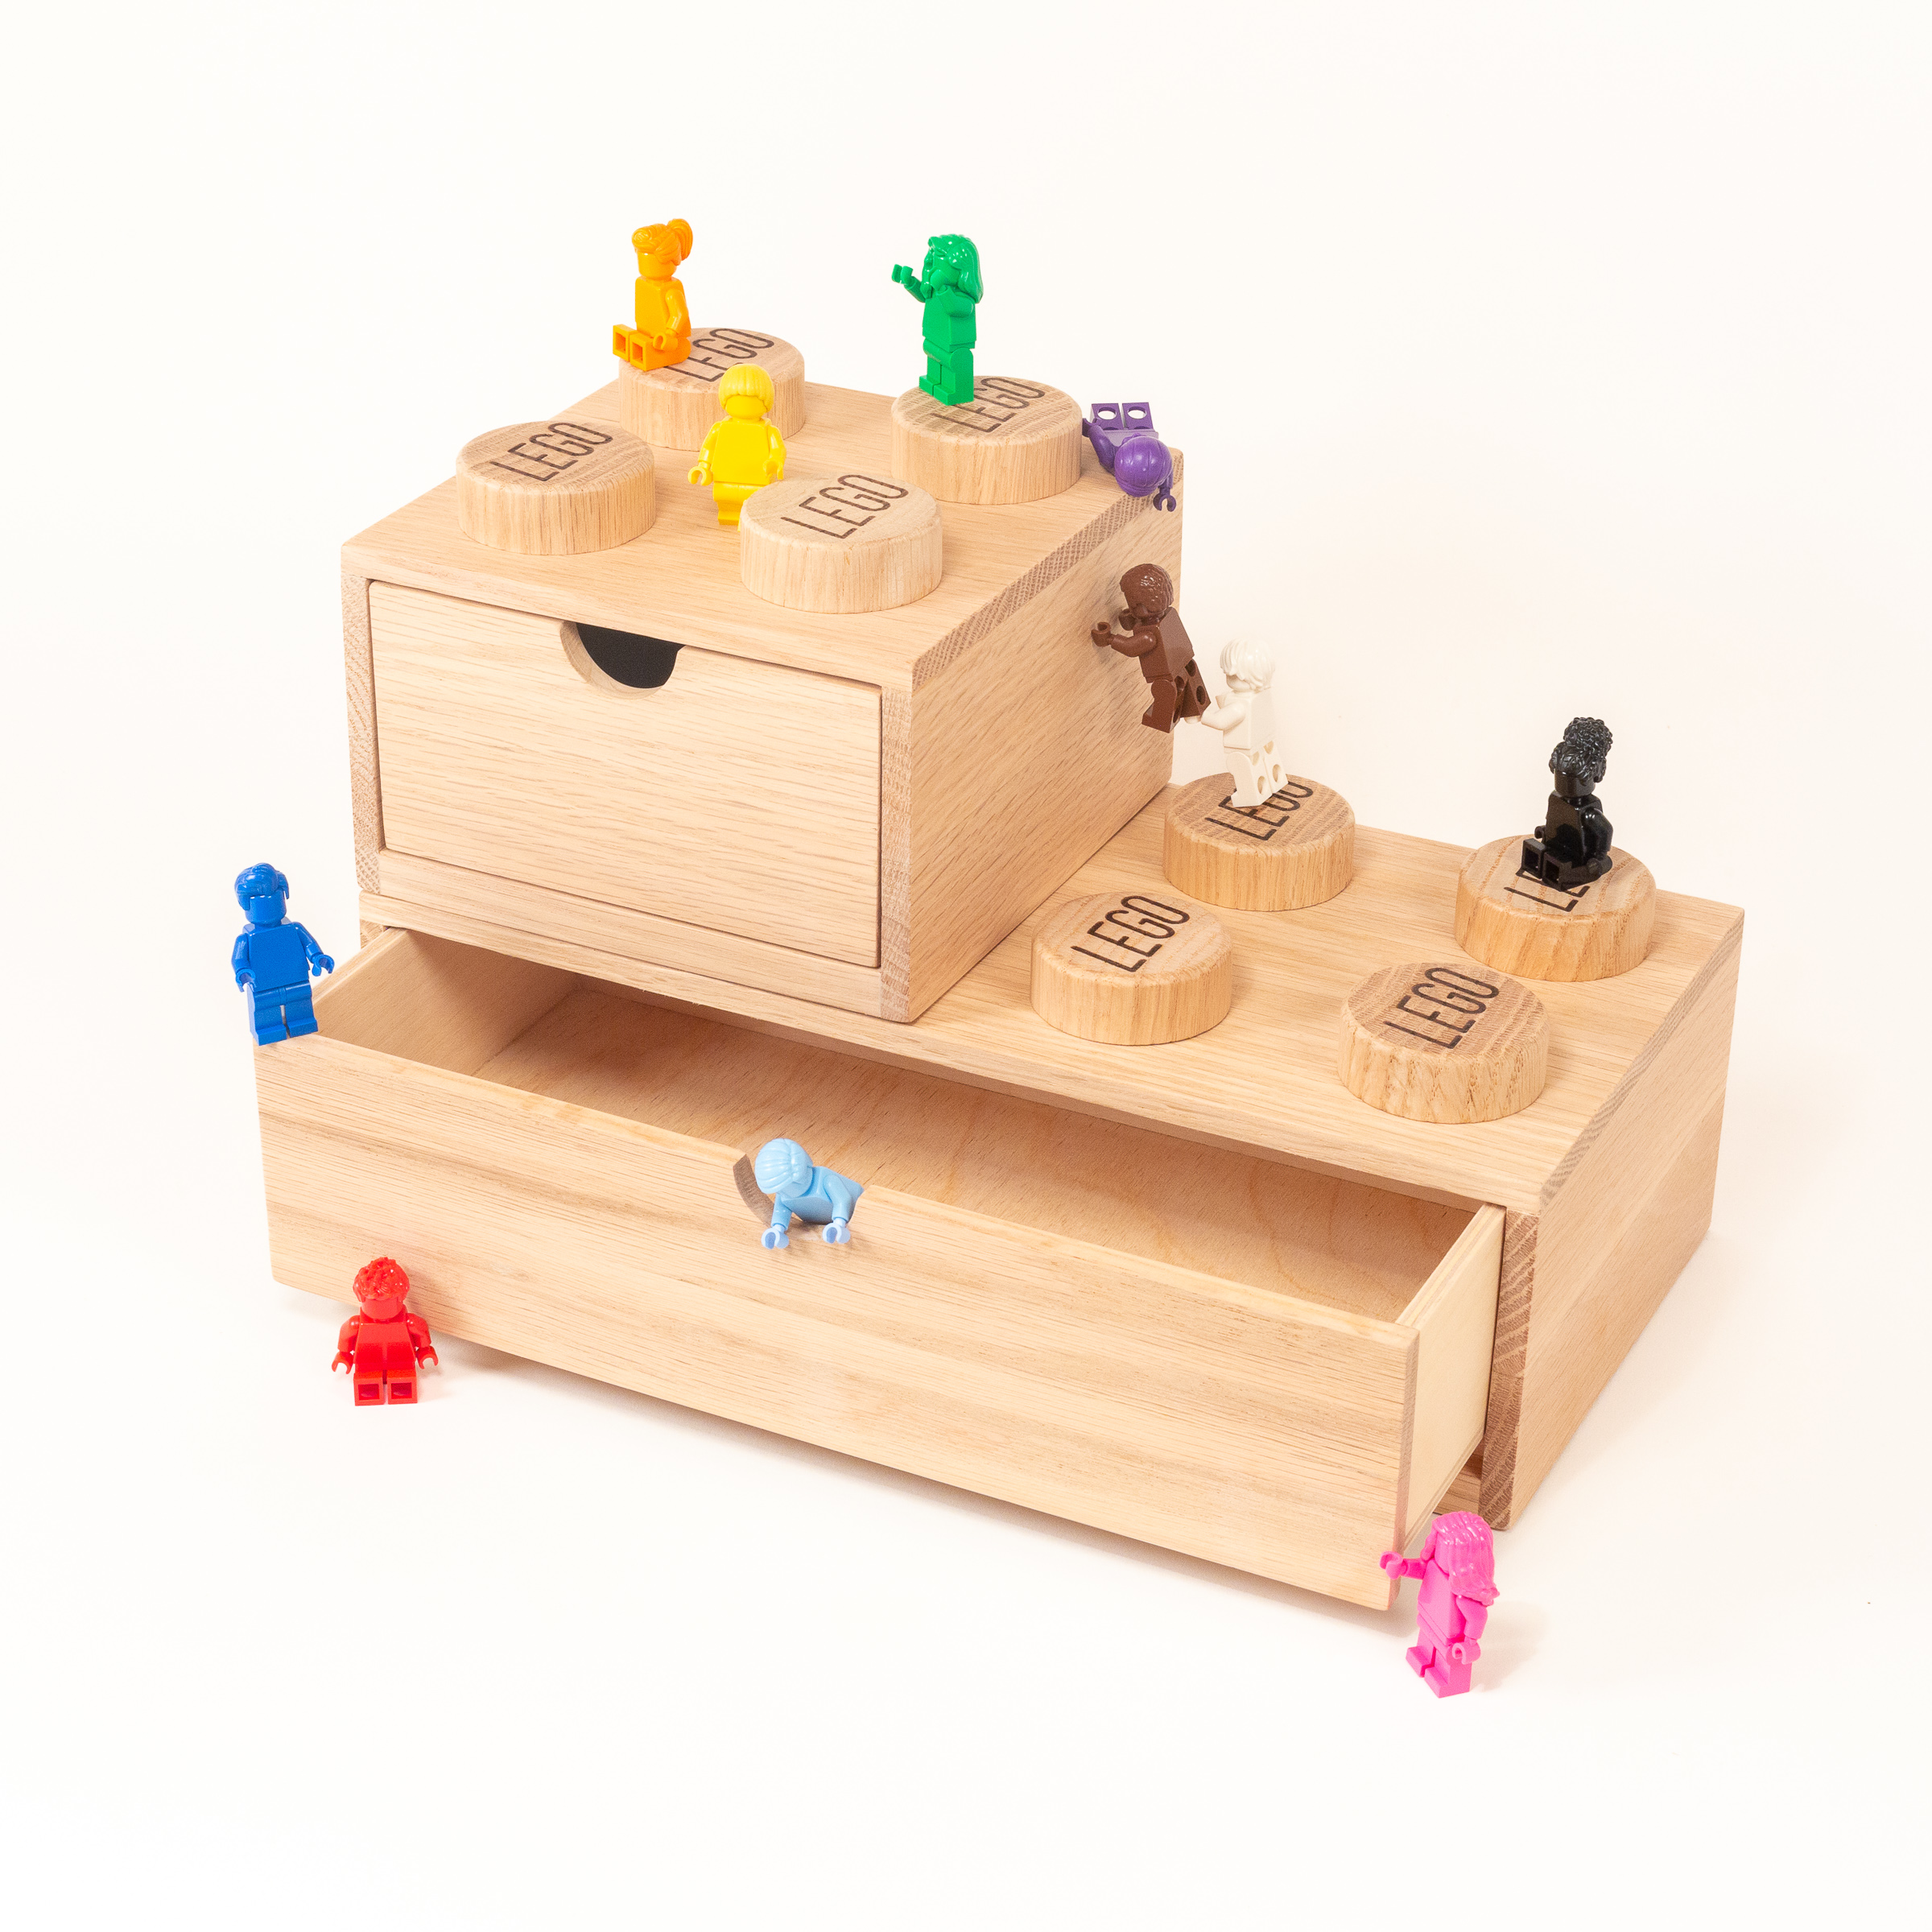 Review: Wooden LEGO Brick Desk Drawers by Room Copenhagen - BRICK ARCHITECT